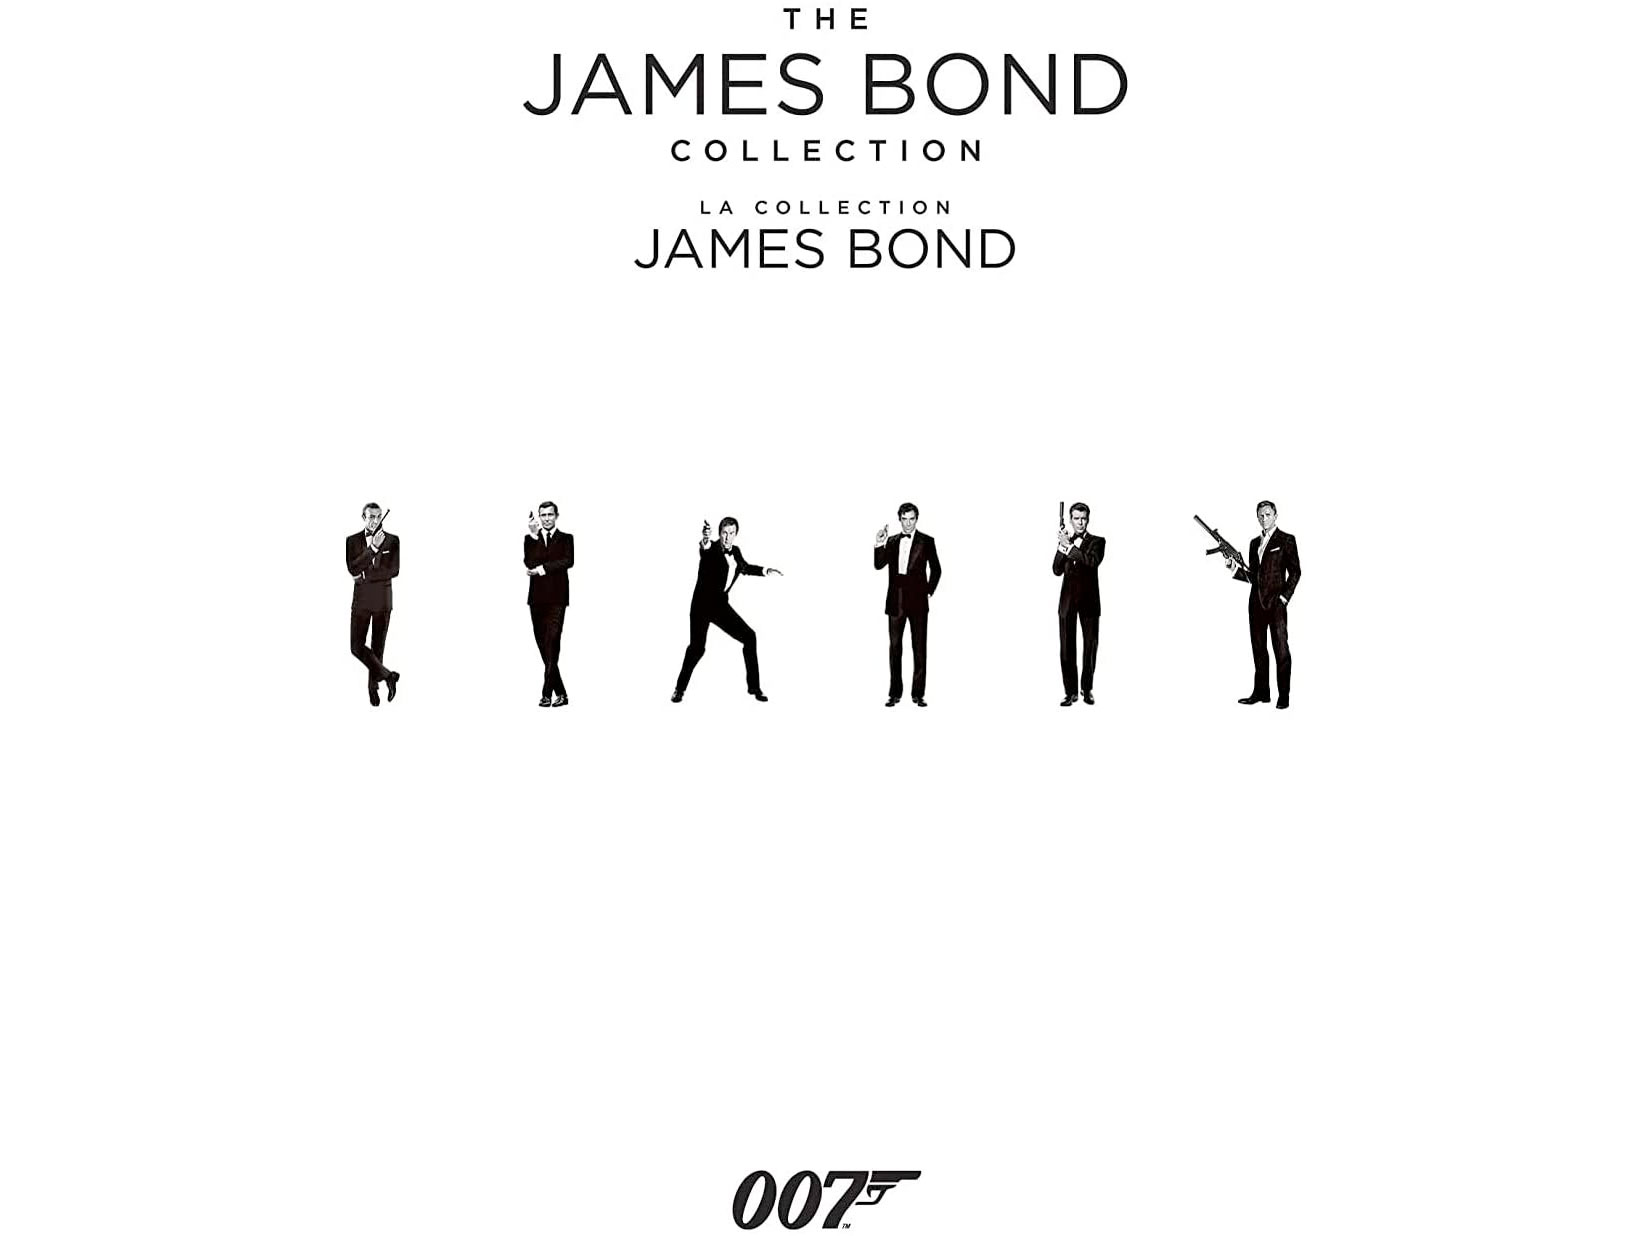 Amazon：James Bond Collection Blu-ray (共24部电影)只卖$67.99